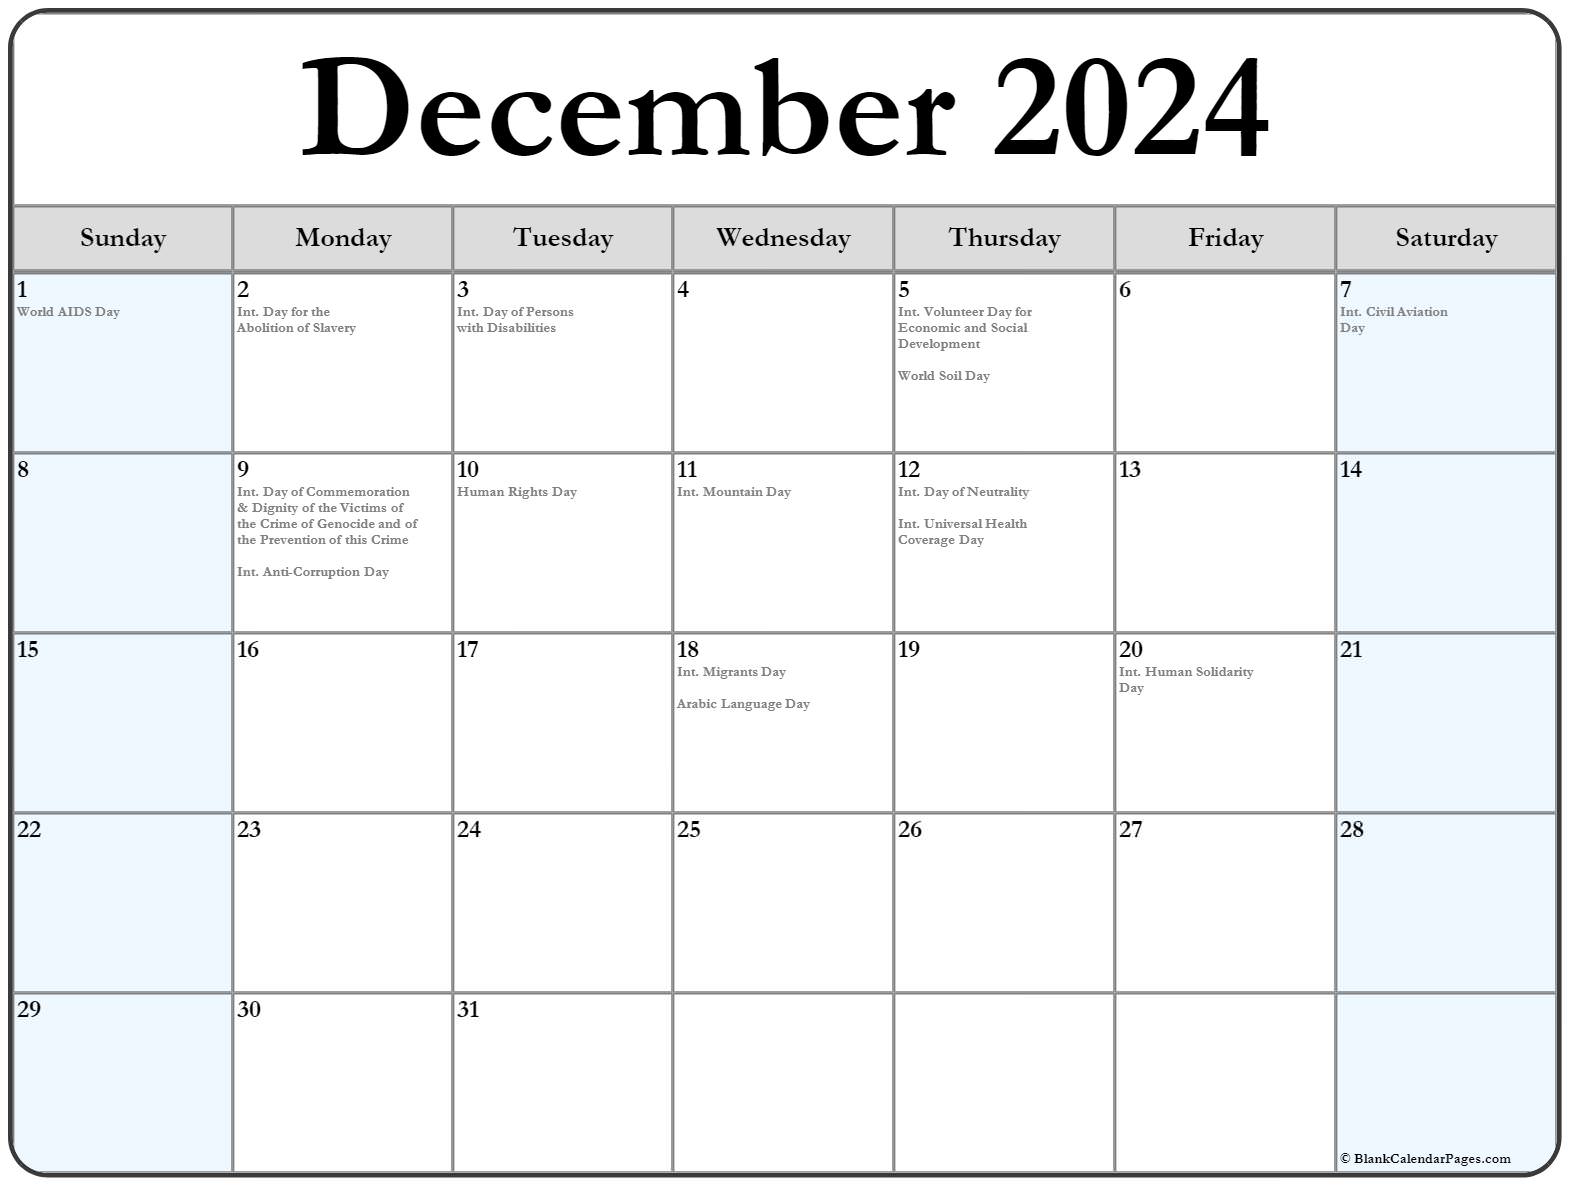 December 2019 Calendar With Holidays